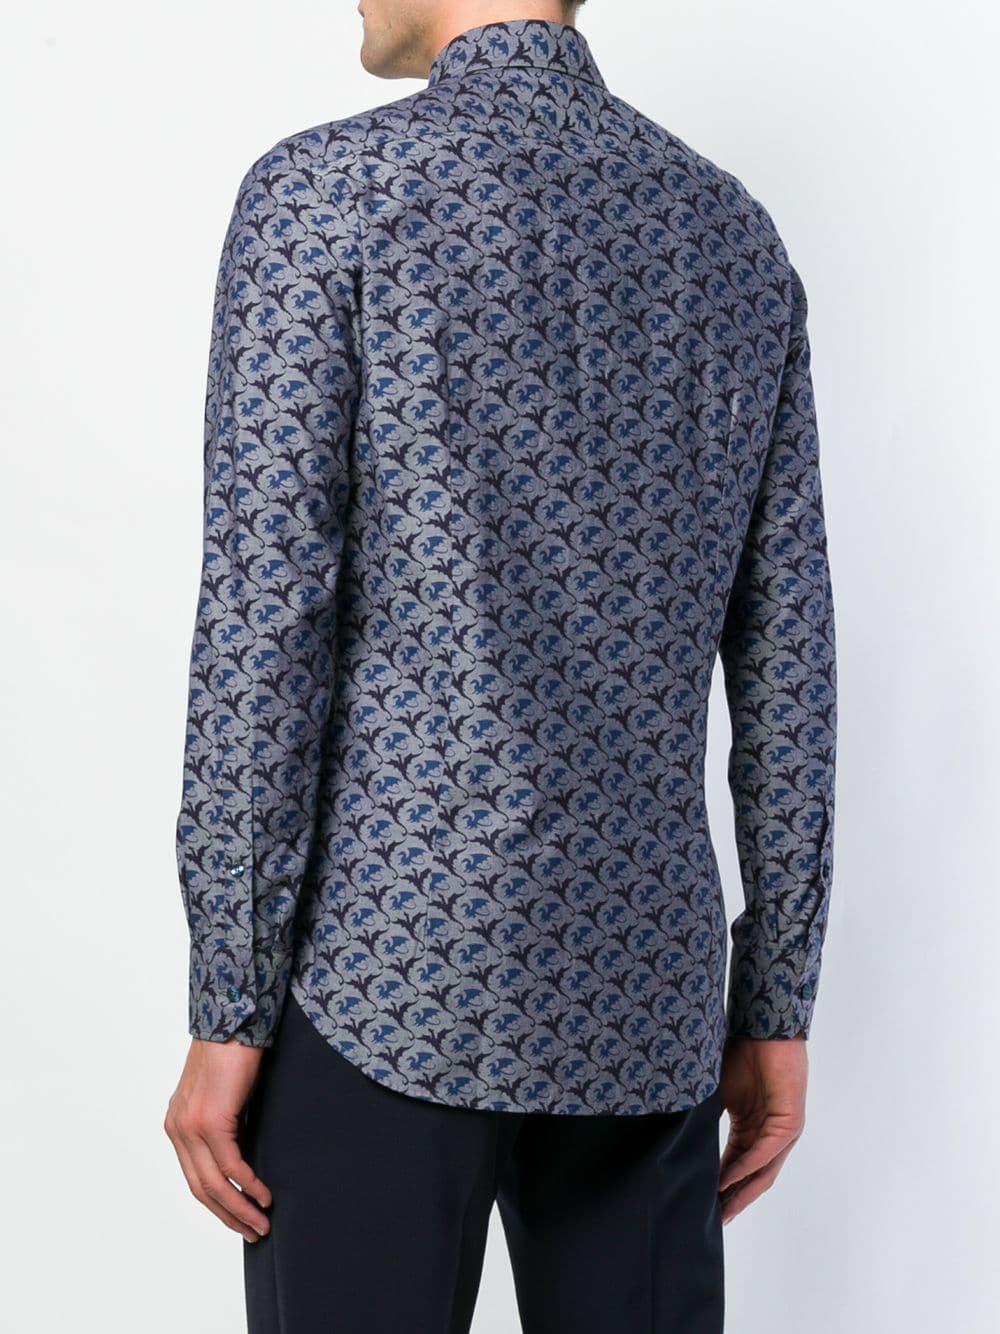 Etro Cotton Dragon Print Shirt in Grey (Gray) for Men - Lyst